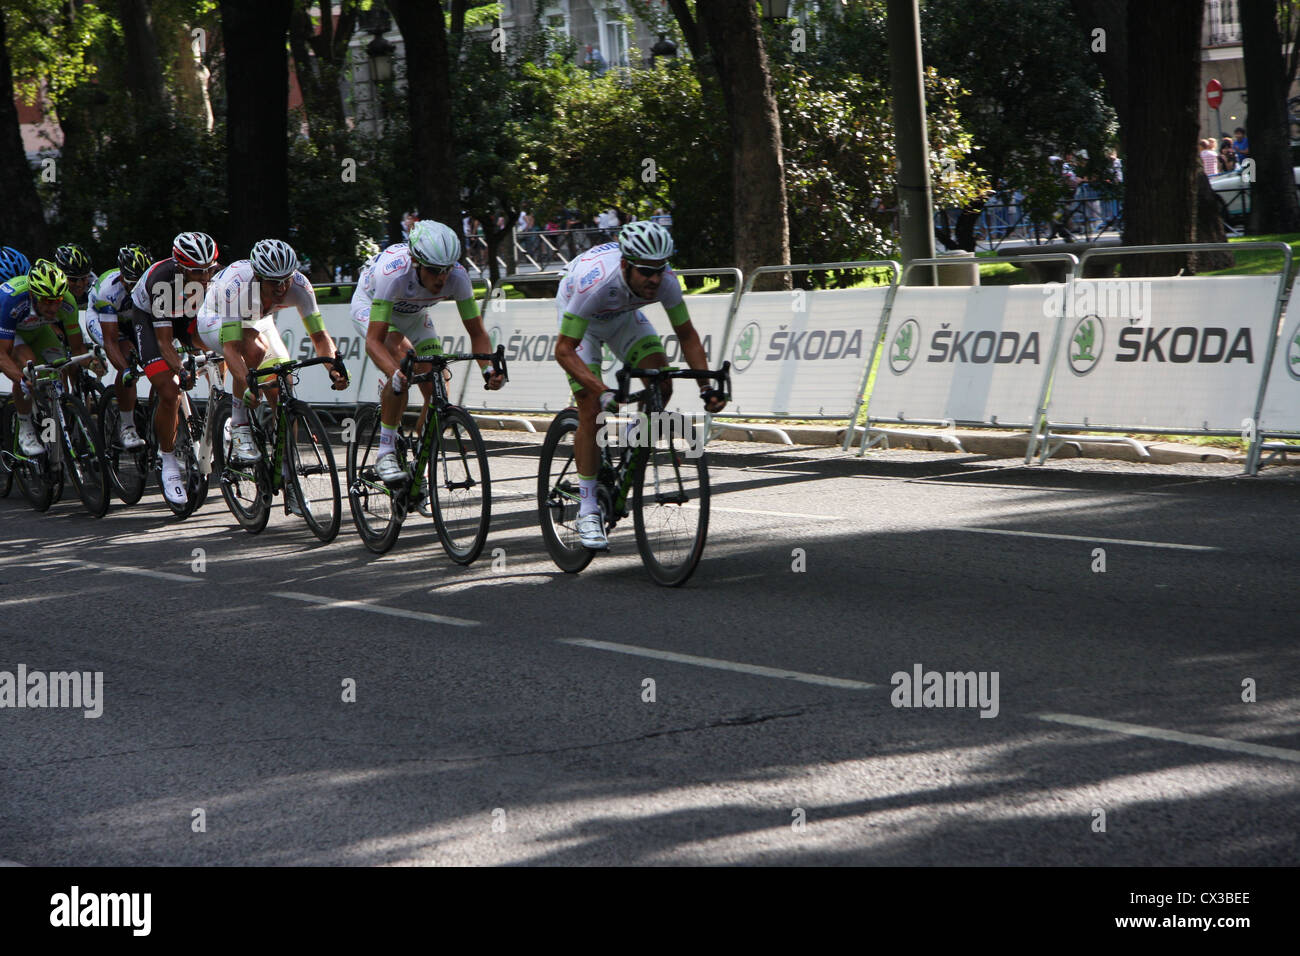 Argos-Shimano John Degenkolb Vuelta a España Tour of Spain 2012 9/09/2012 Paseo del Prado Madrid Stock Photo